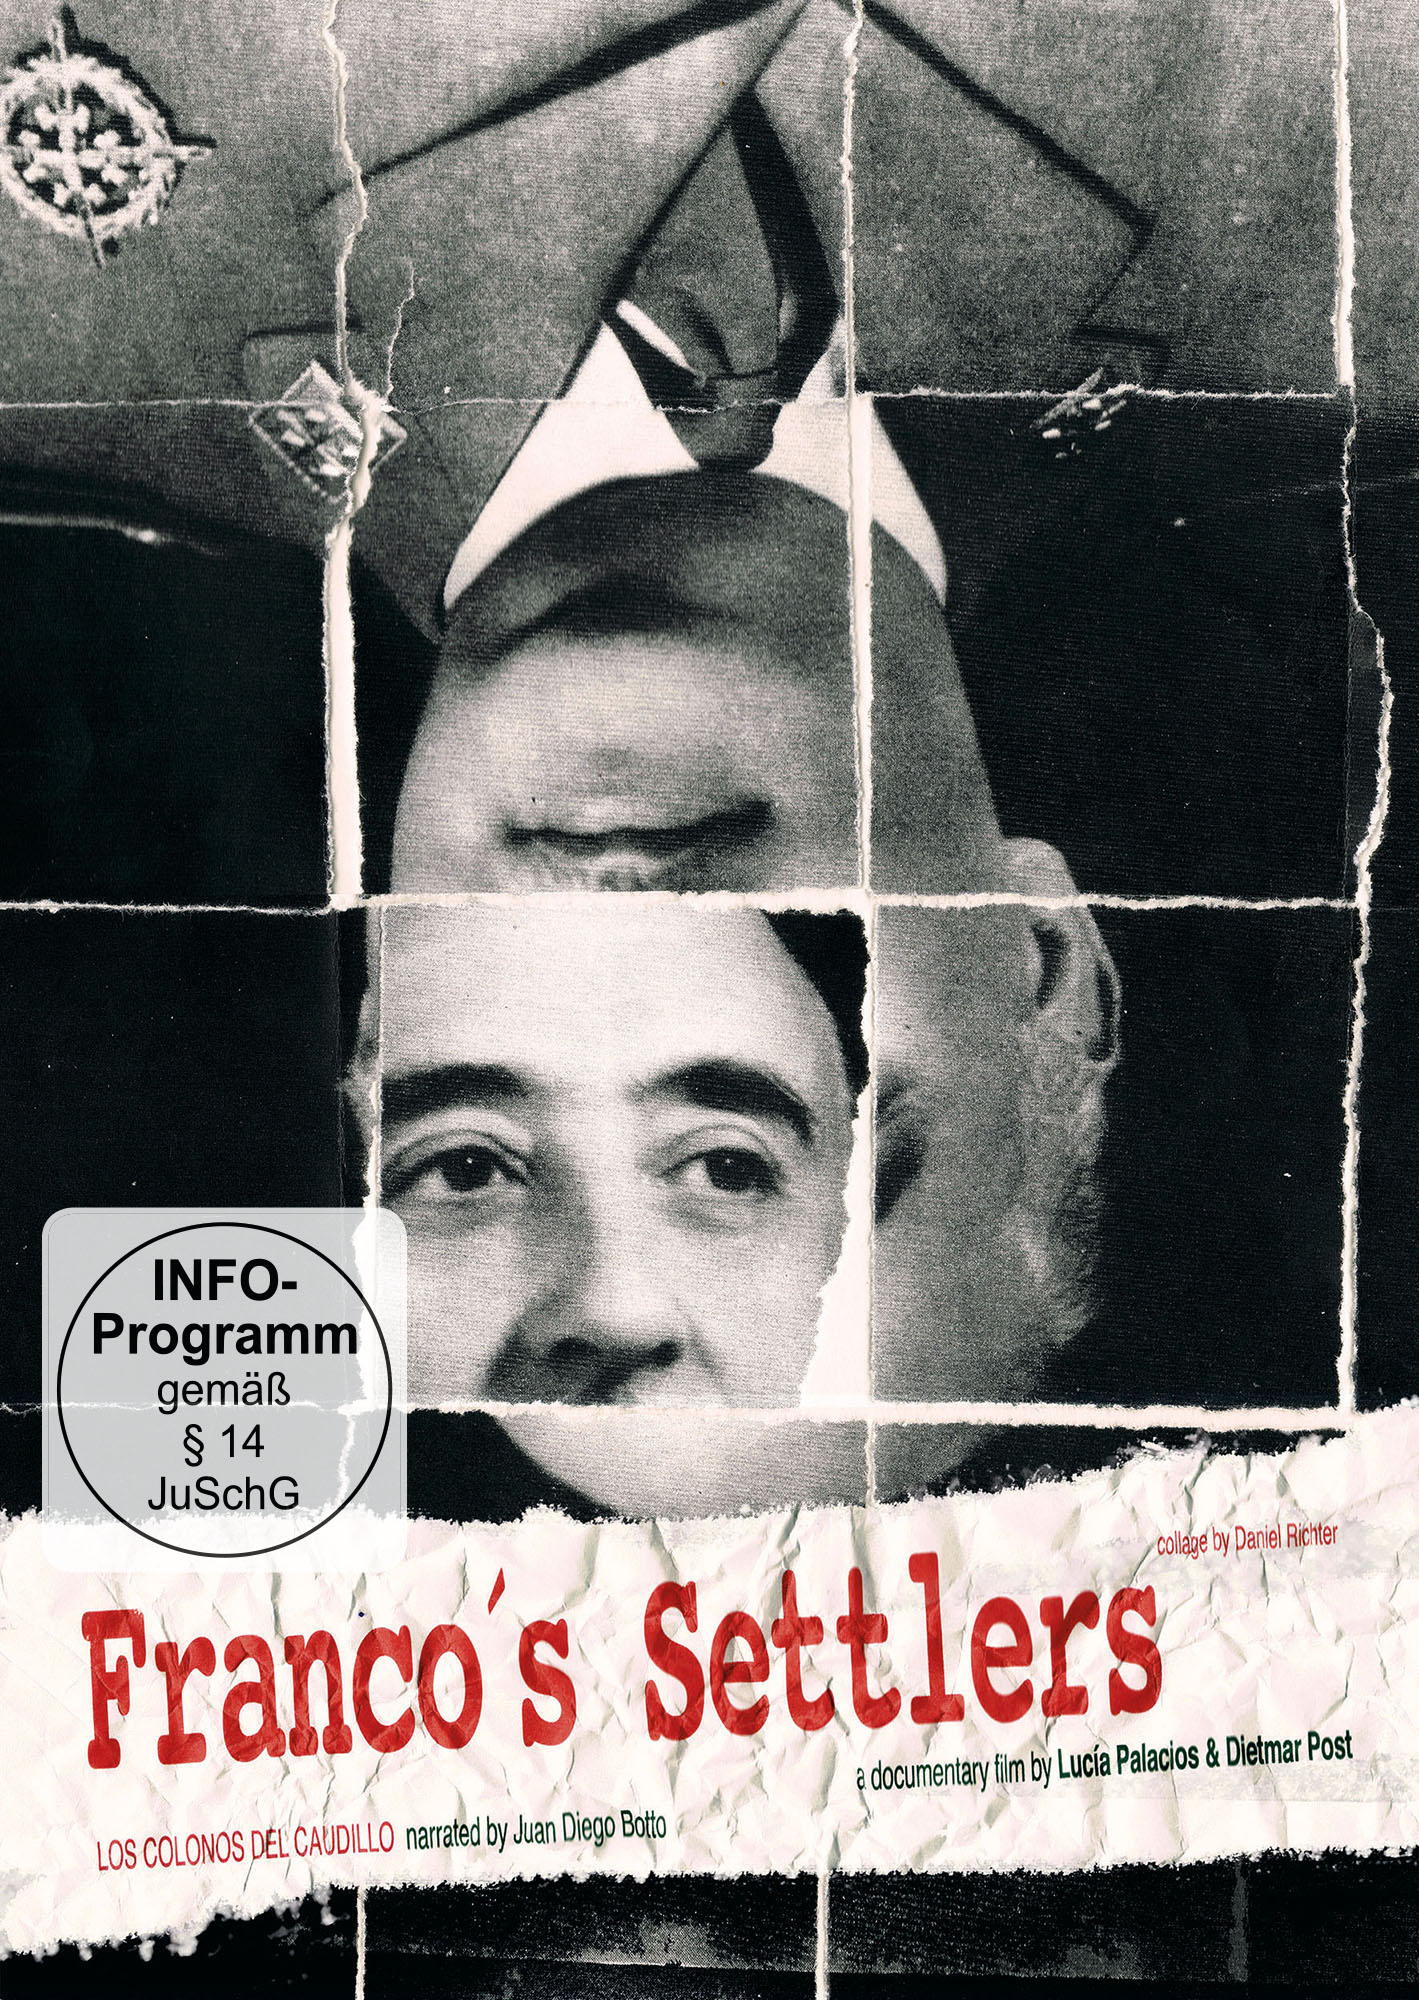 Die Siedler Francos DVD